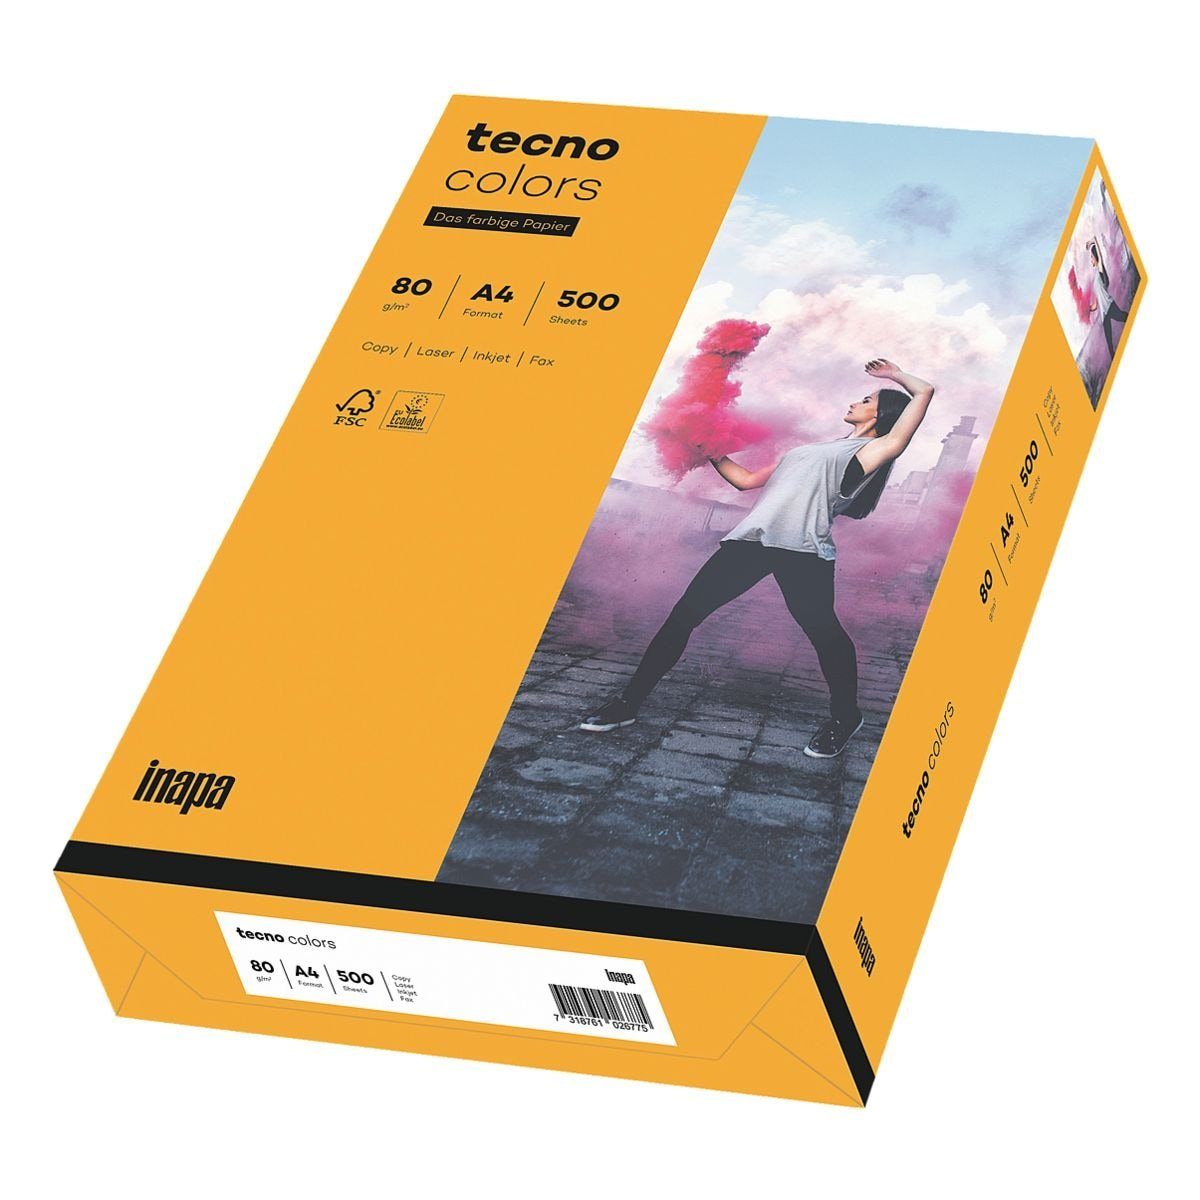 Inapa tecno Drucker- und Kopierpapier Rainbow / tecno Colors, Pastellfarben, Format DIN A4, 80 g/m², 500 Blatt mittelorange